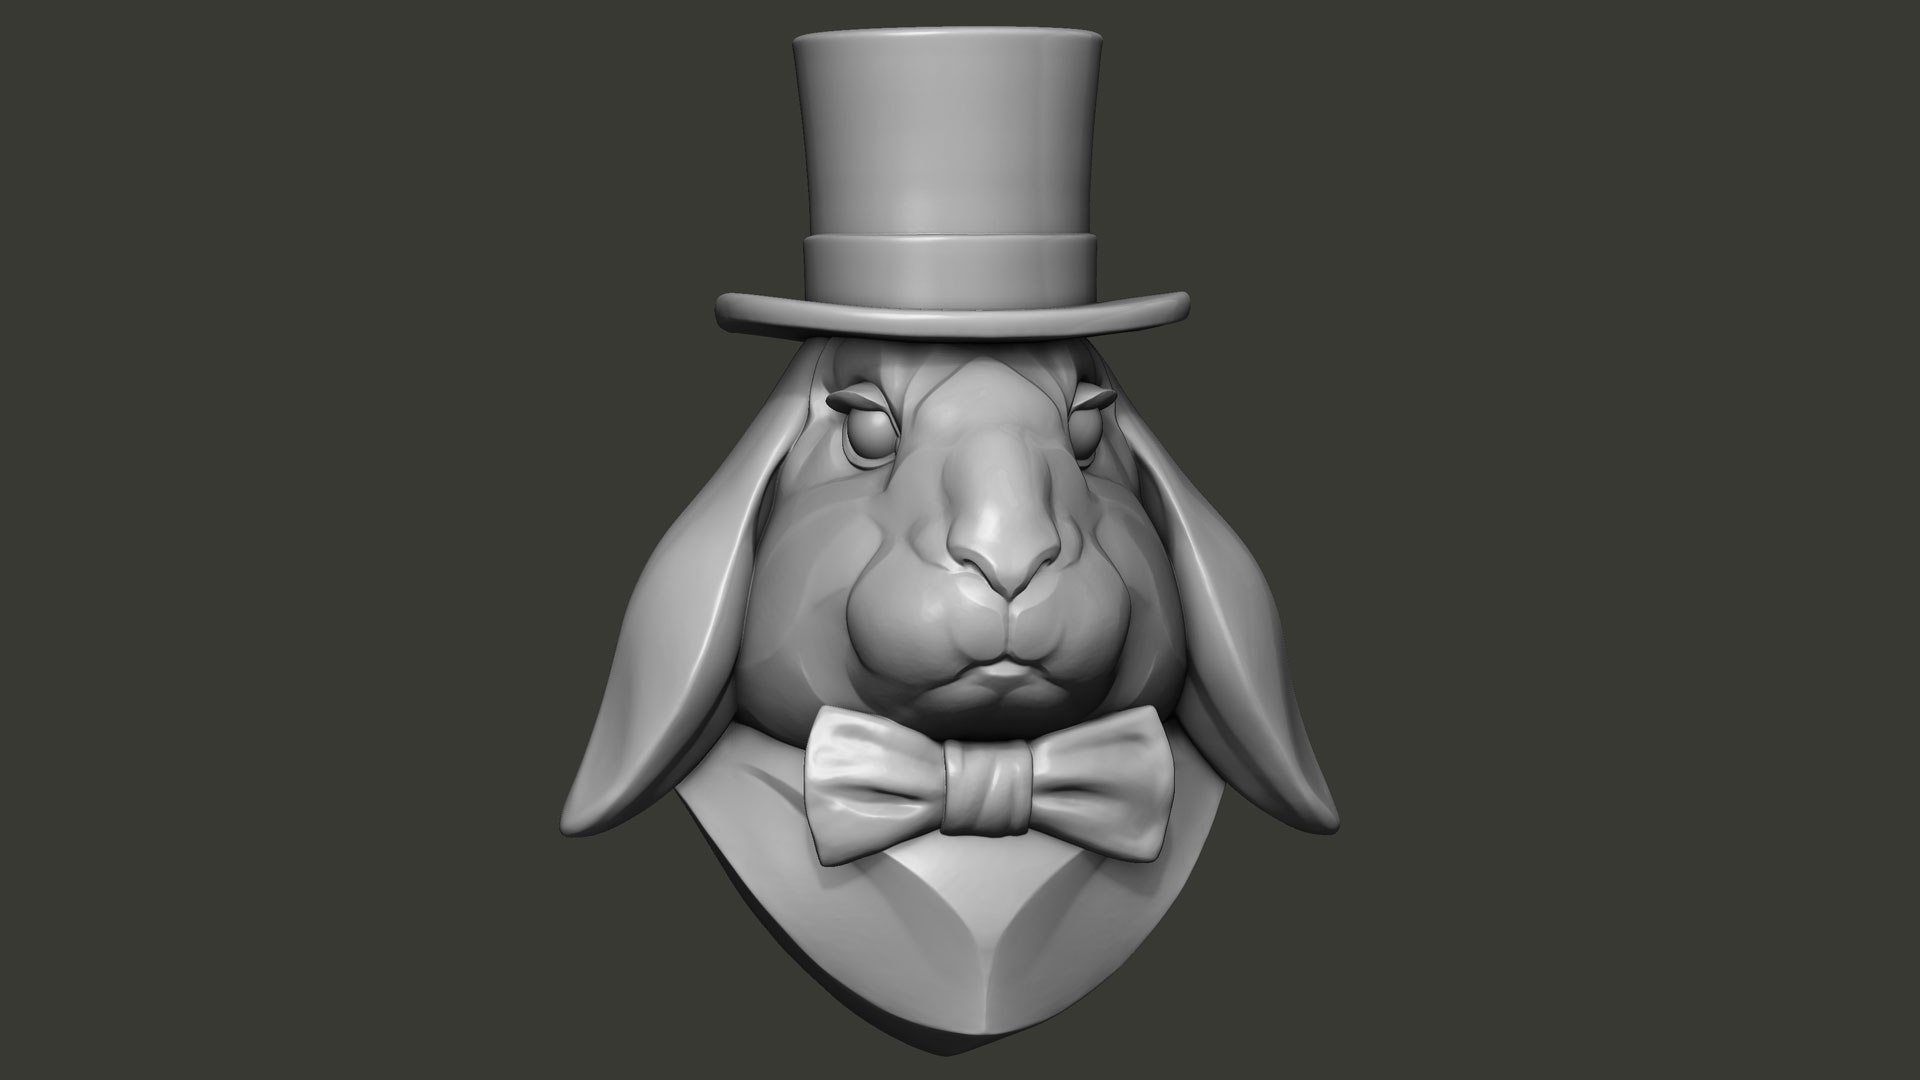 Lop Rabbit Head Hat Sculpture STL 3DLop-Eared Rabbit in a Hat Sculpture 3D printable STL file